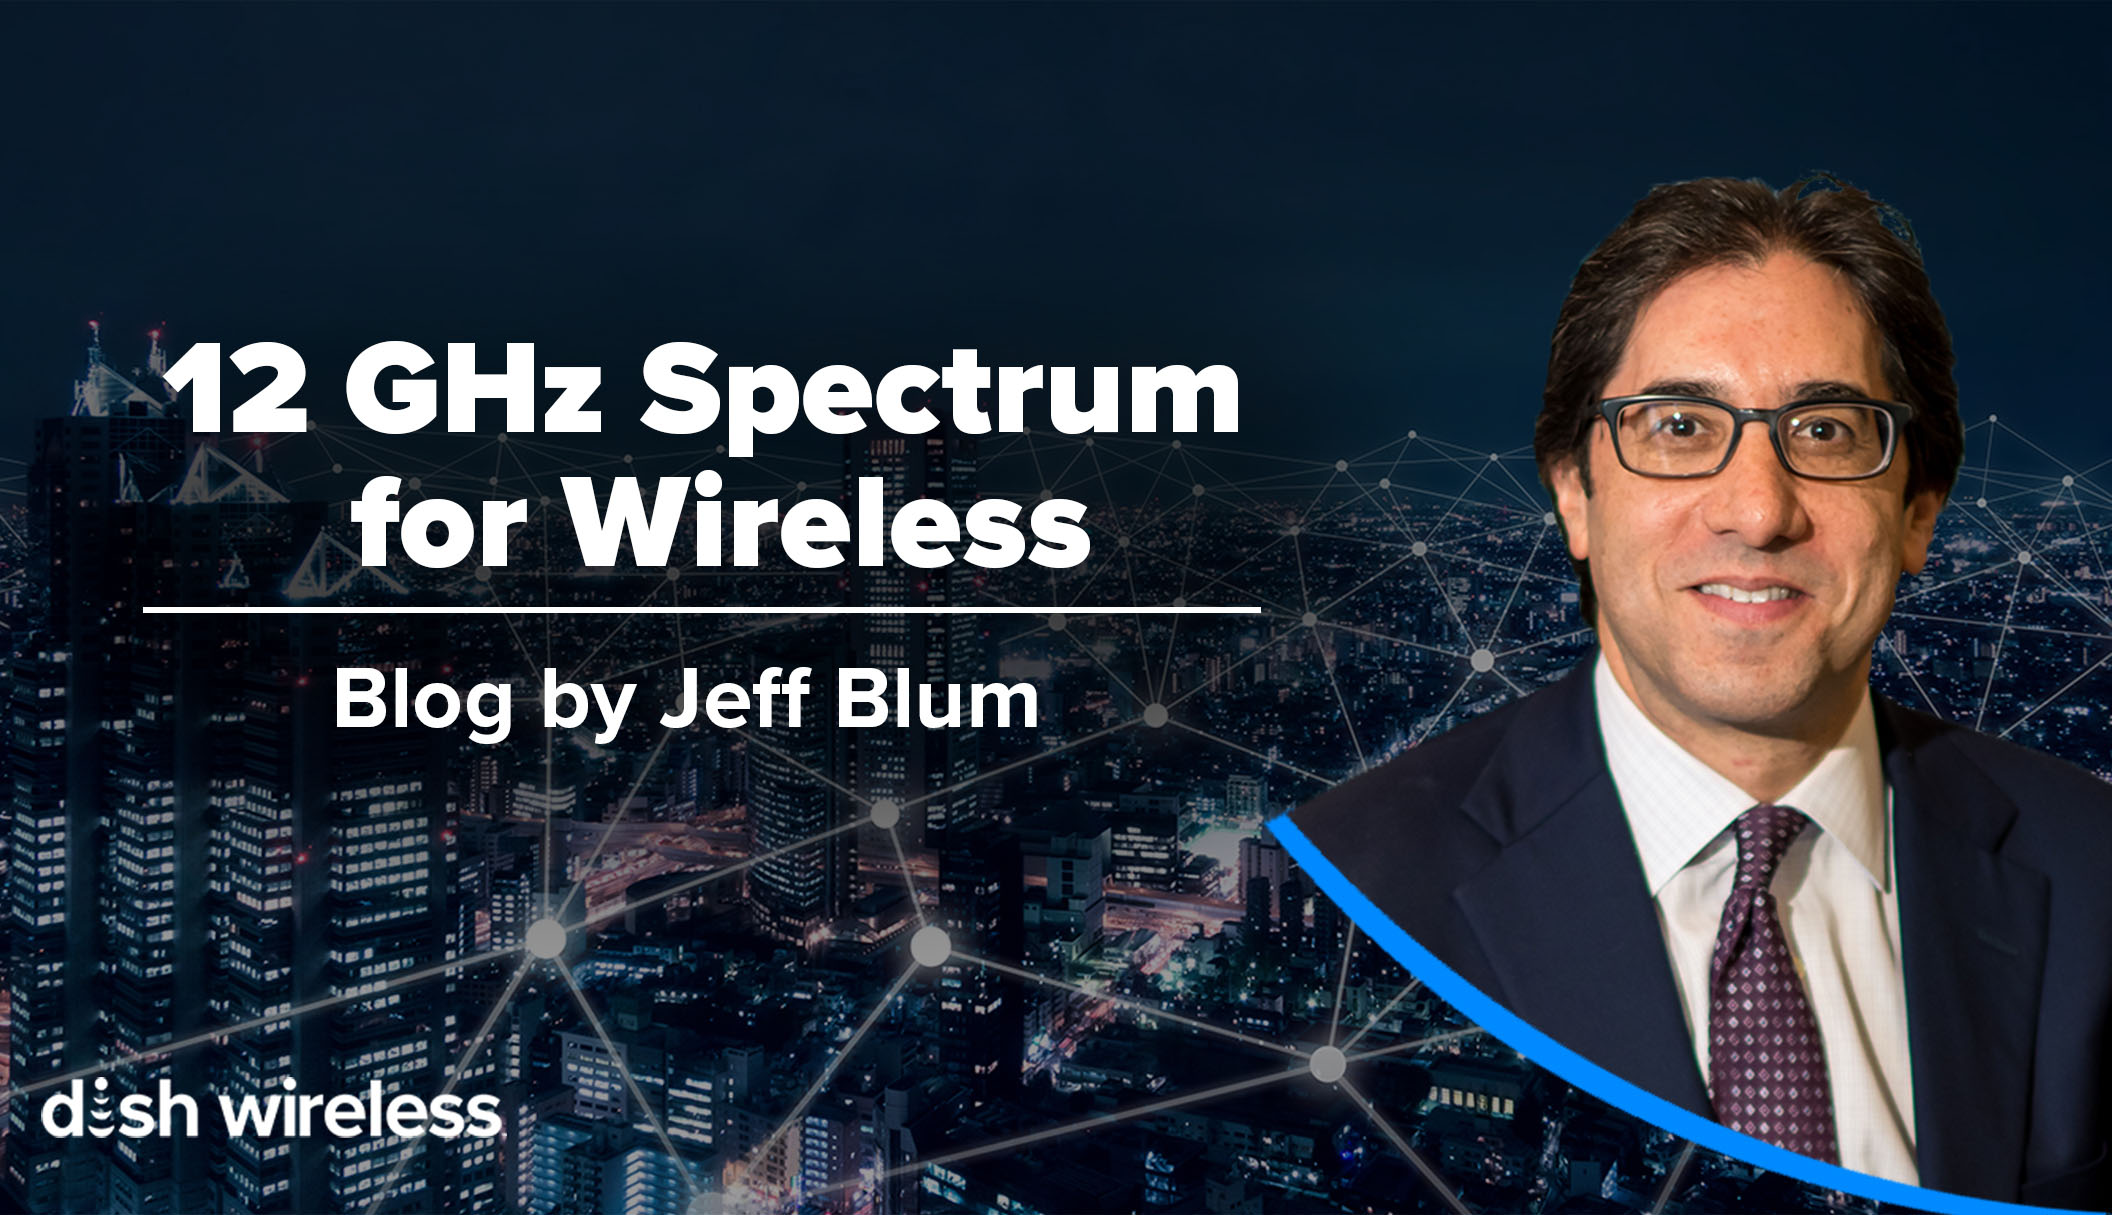 blog graphic tile jeff blum 12 ghz spectrum dish wireless enterprise